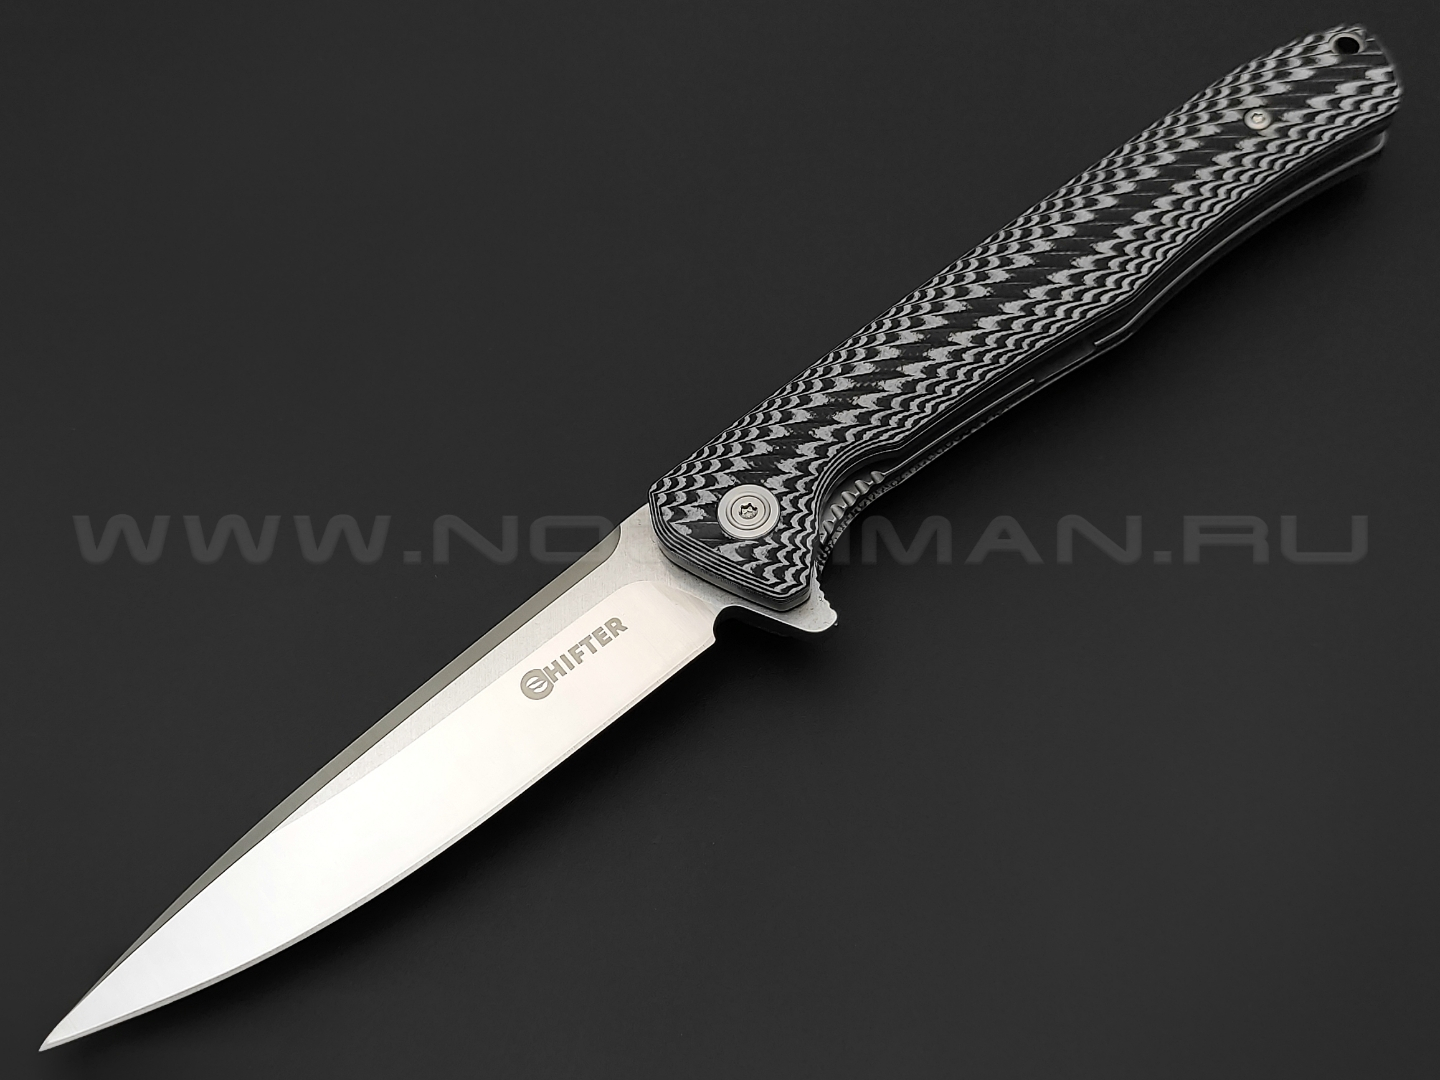 Shifter складной нож Baron сталь 8Cr14MoV, рукоять G10 black & white